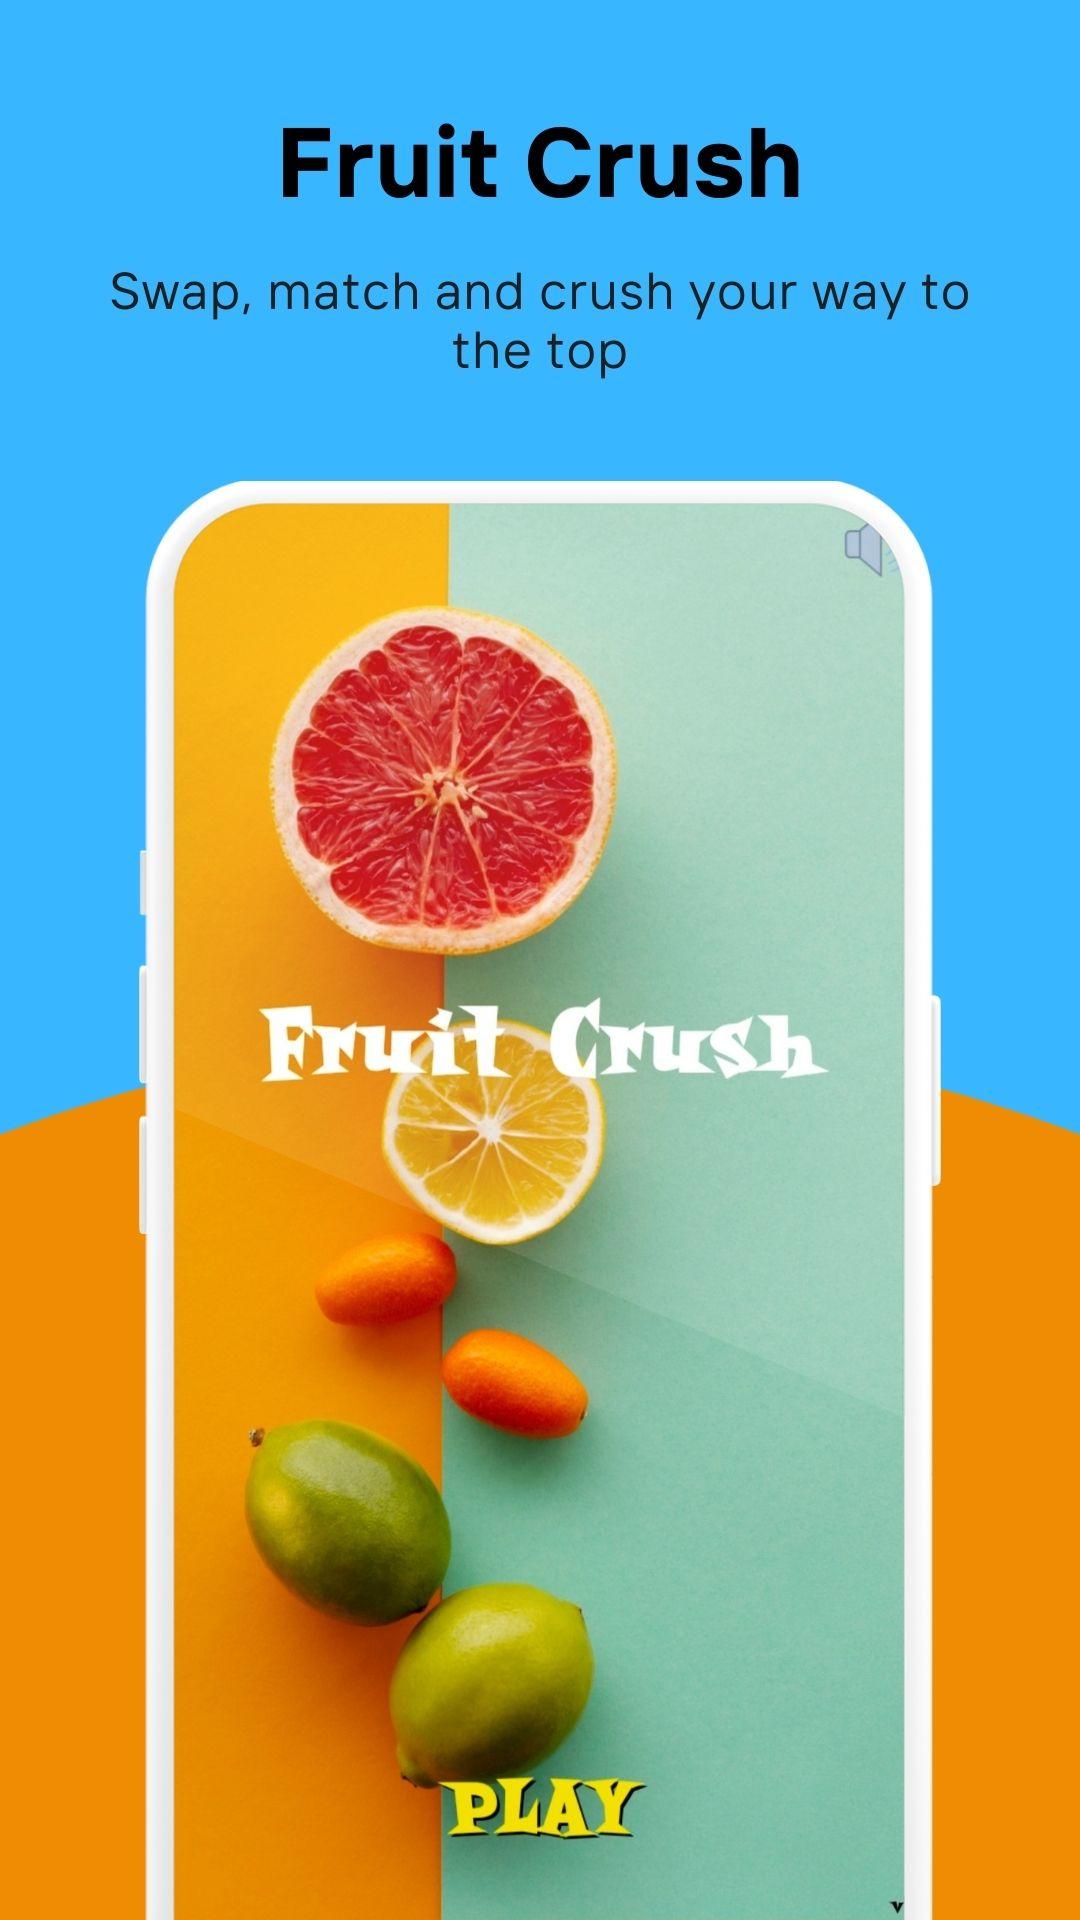 Fruita Crush - Free Play & No Download